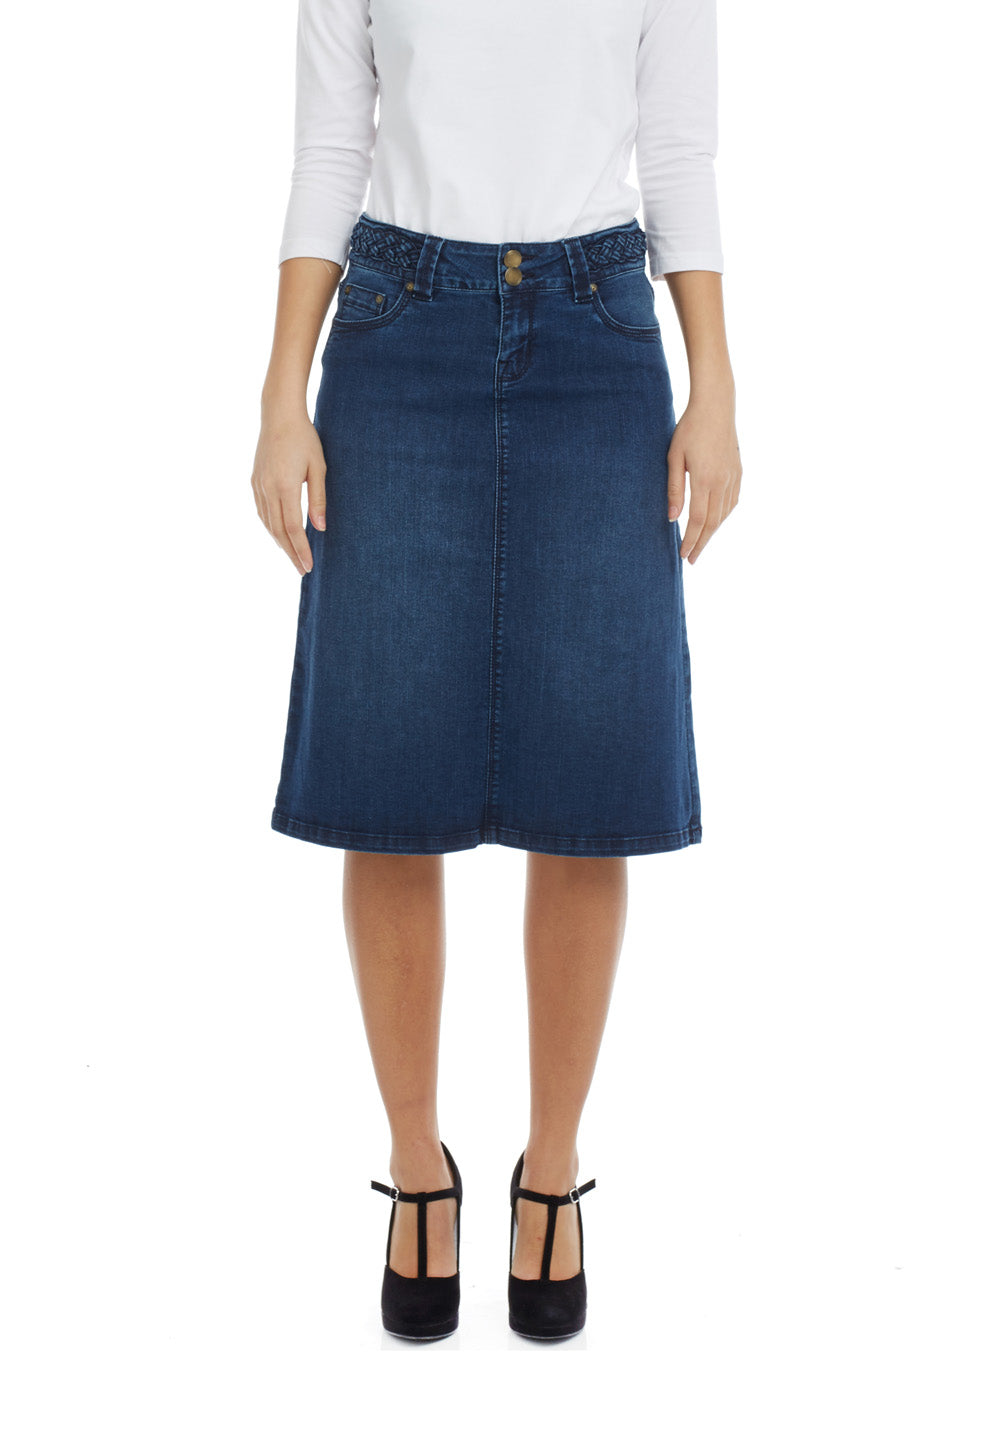 jean skirts for women